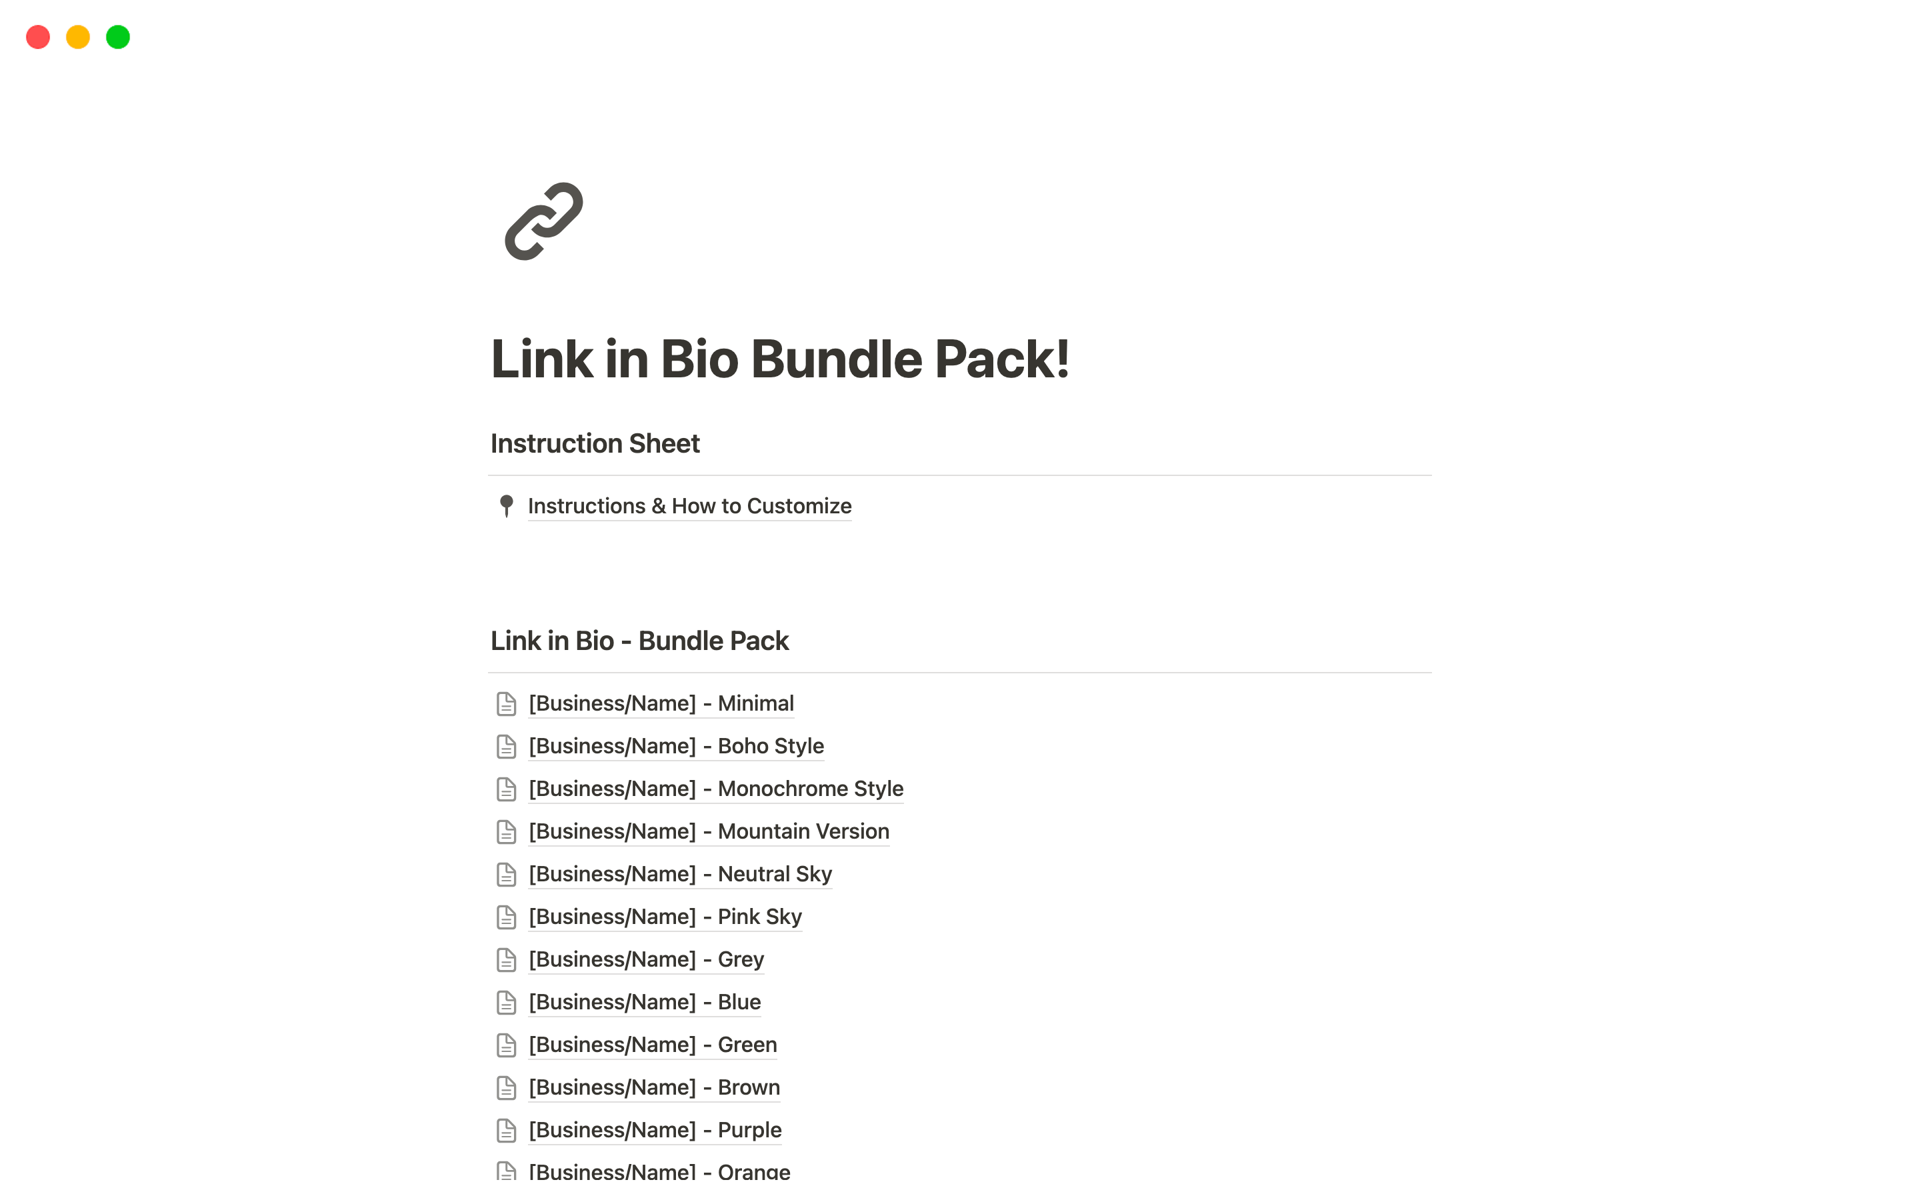 Aperçu du modèle de Link-in-Bio Bundle Pack